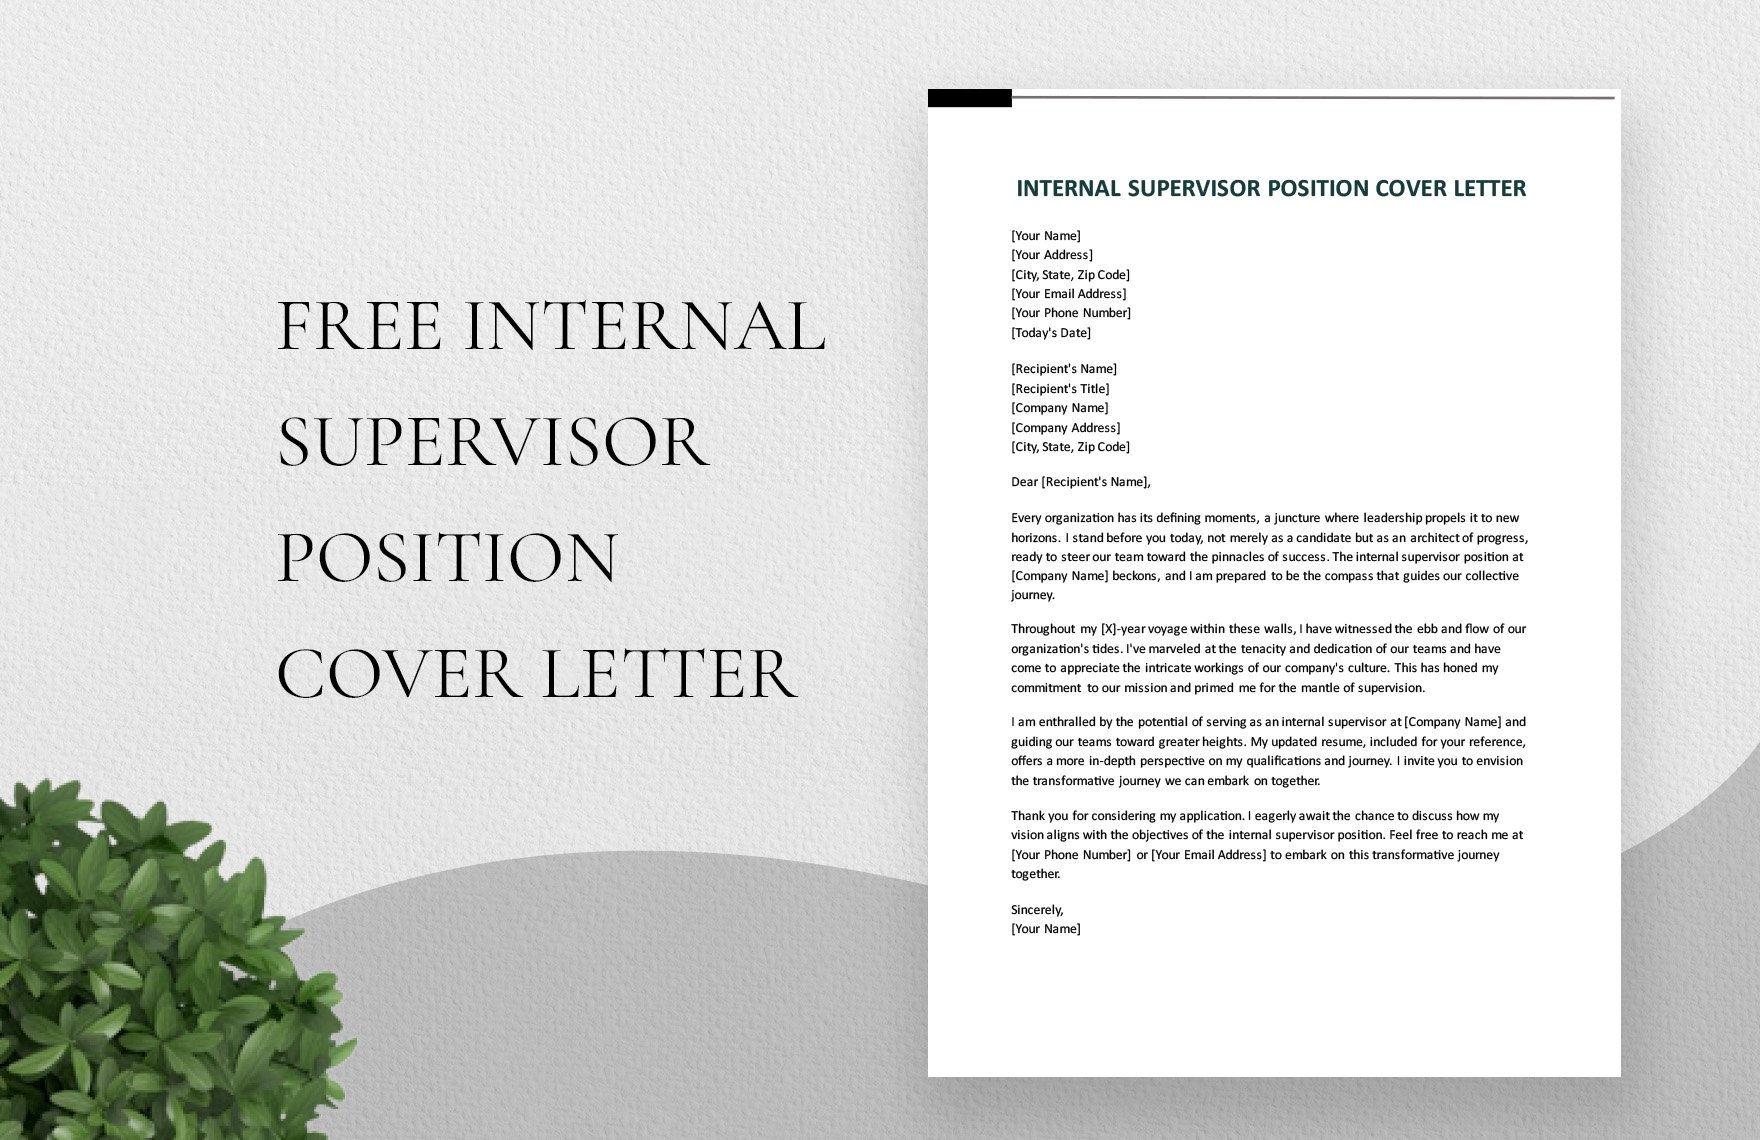 Internal Supervisor Position Cover Letter in Word, Google Docs, PDF